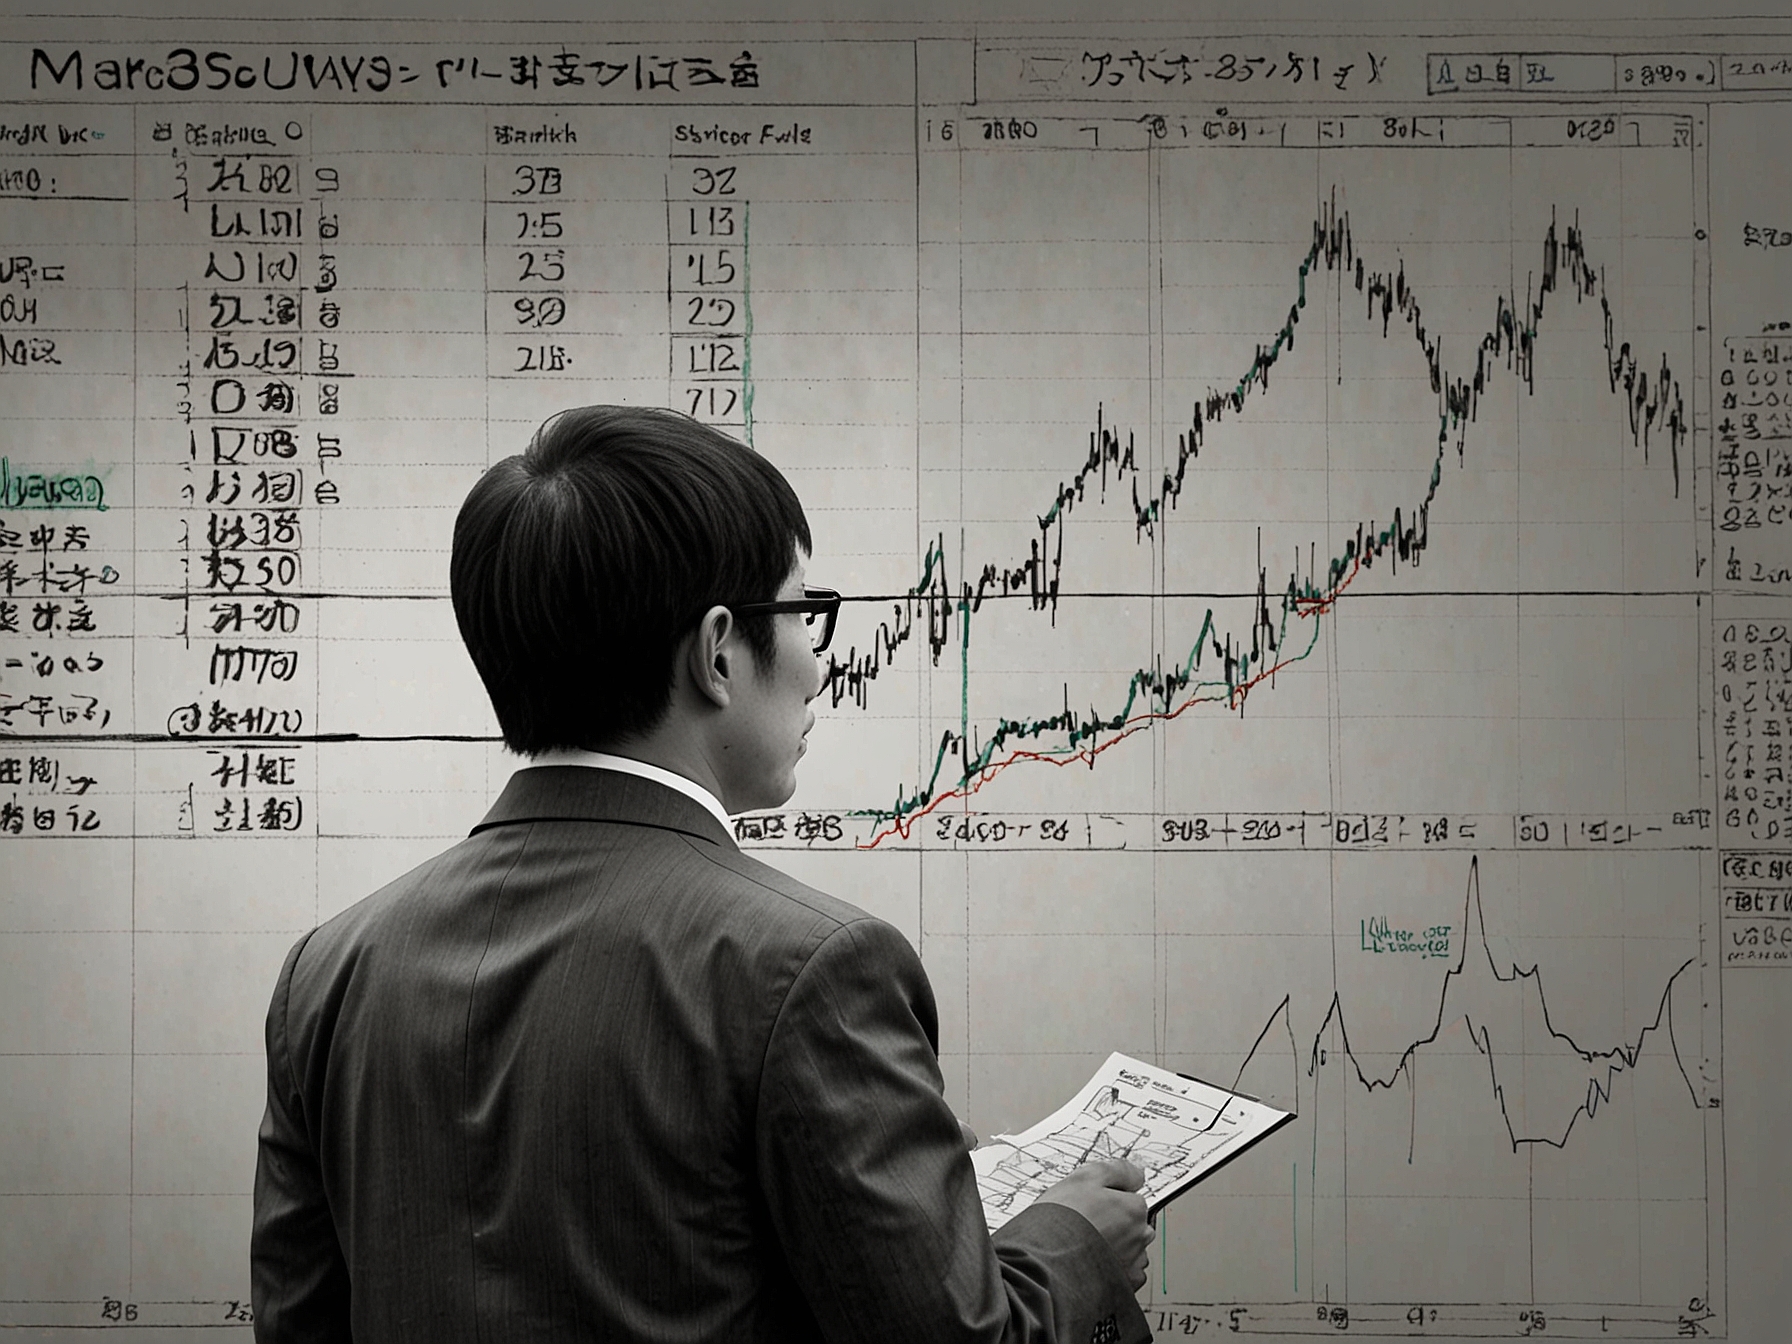 Graph showing the stock performance of major Japanese banks like Mitsubishi UFJ, Sumitomo Mitsui, and Mizuho Financial, indicating significant gains over the week.